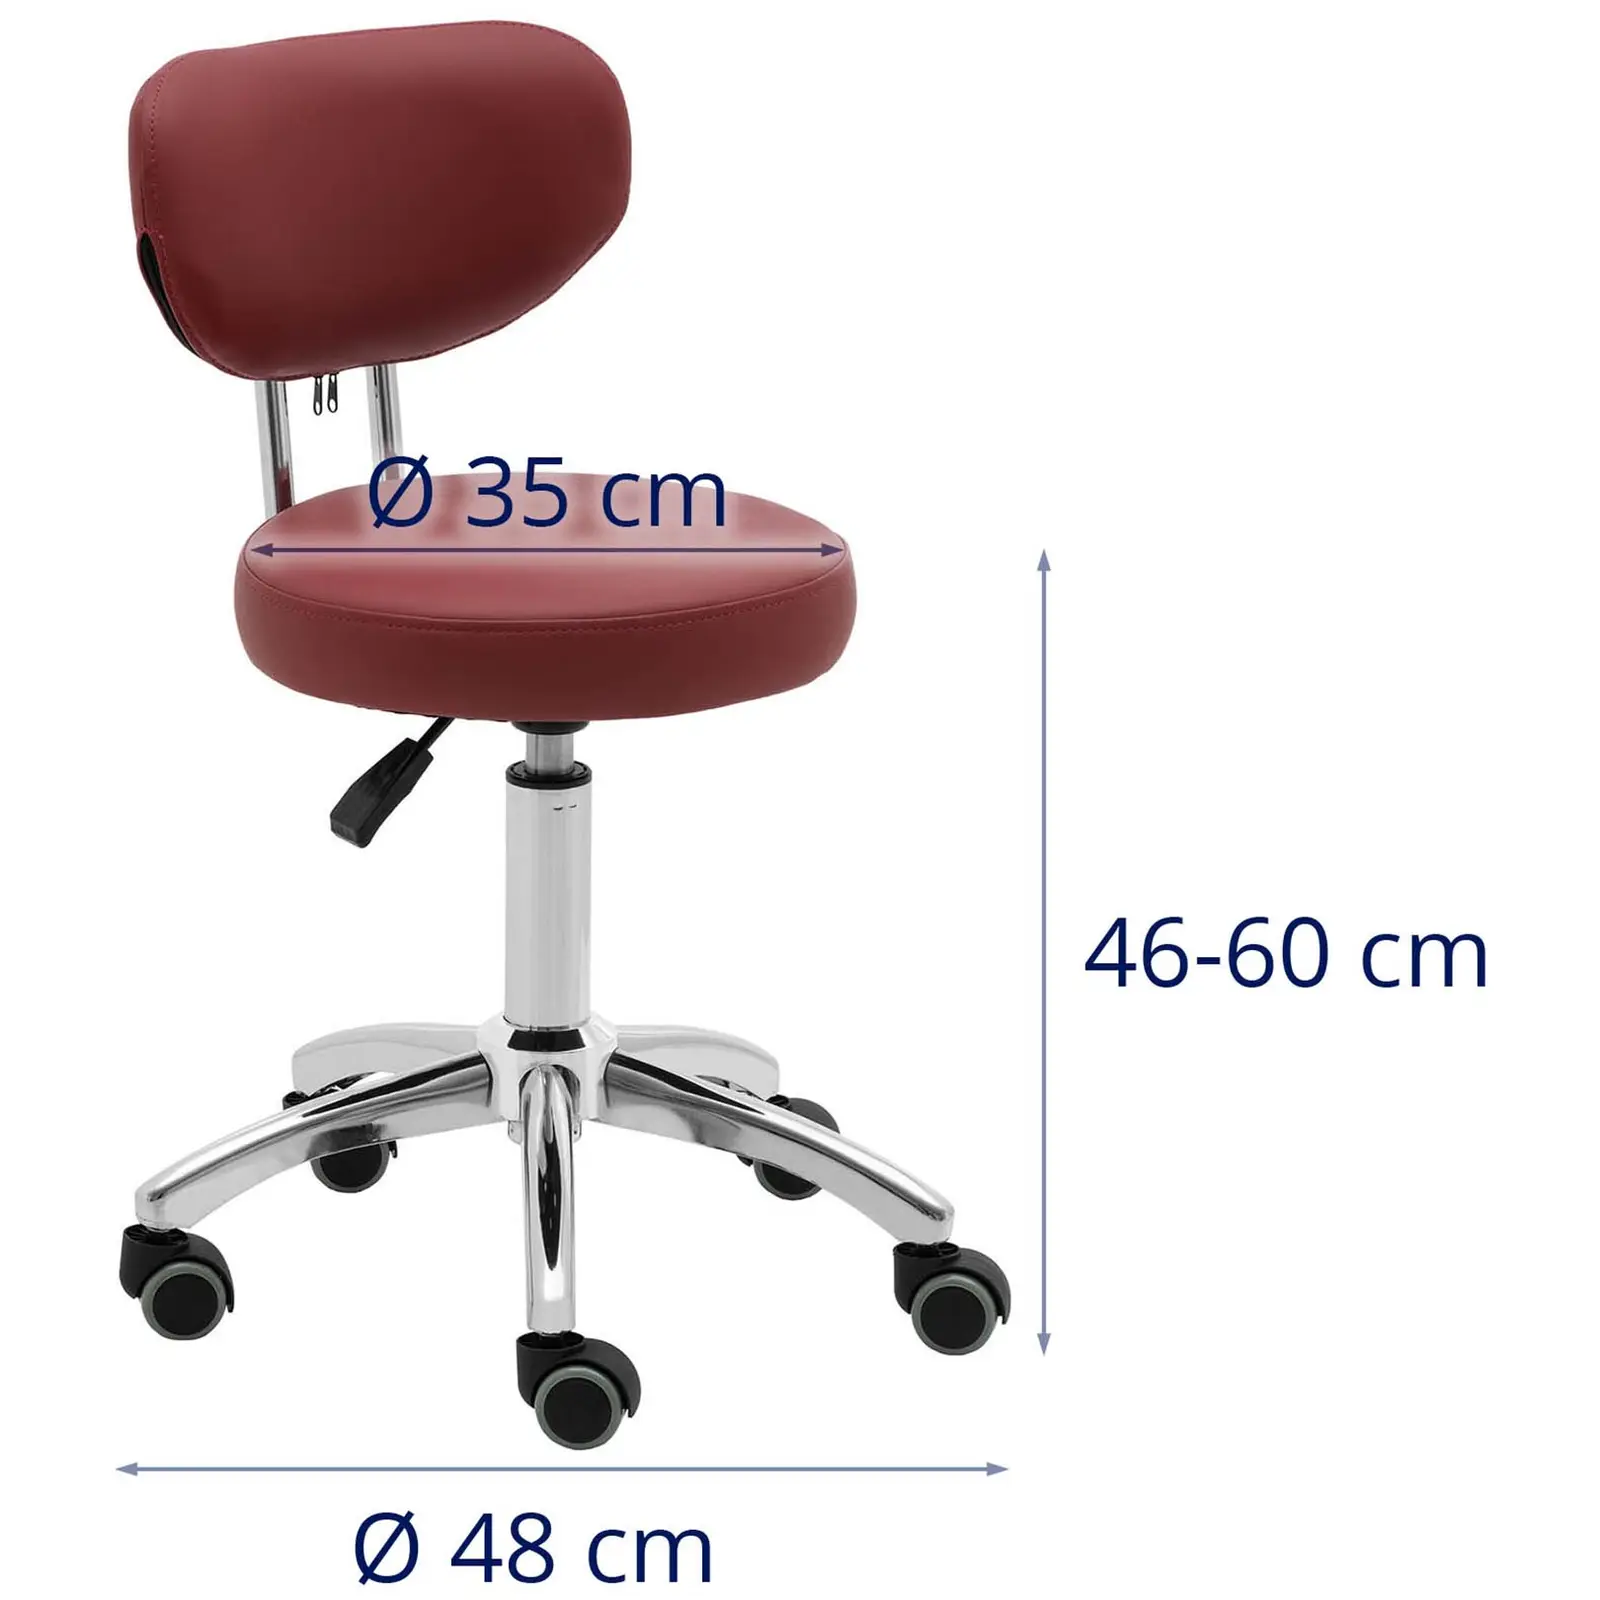 Arbejdsstol med hjul - 46 - 60 cm - 150 kg - Bourgogne